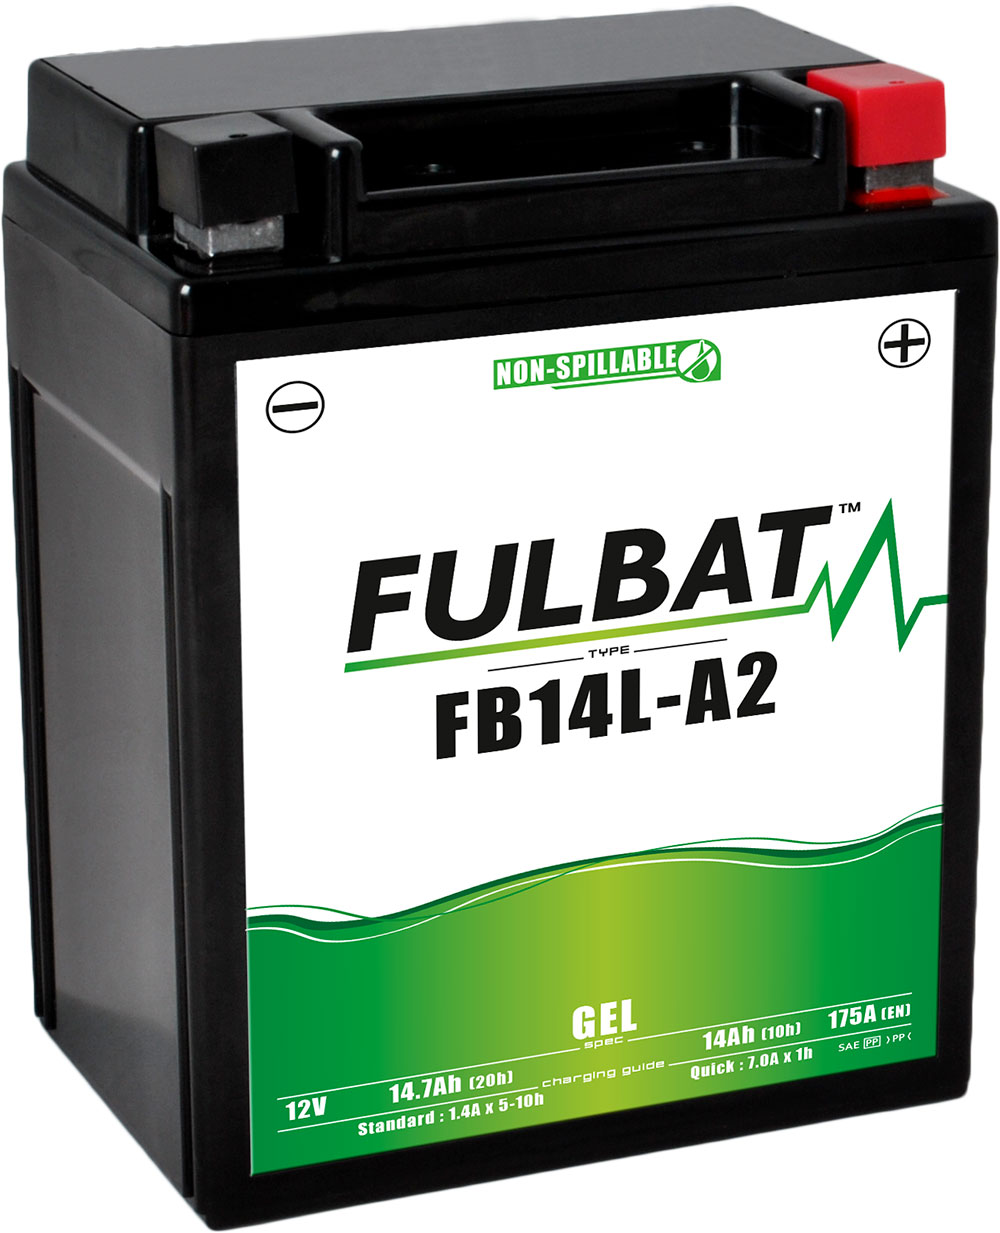 Fulbat FB14L-A2 Gel Motorcycle Battery Size